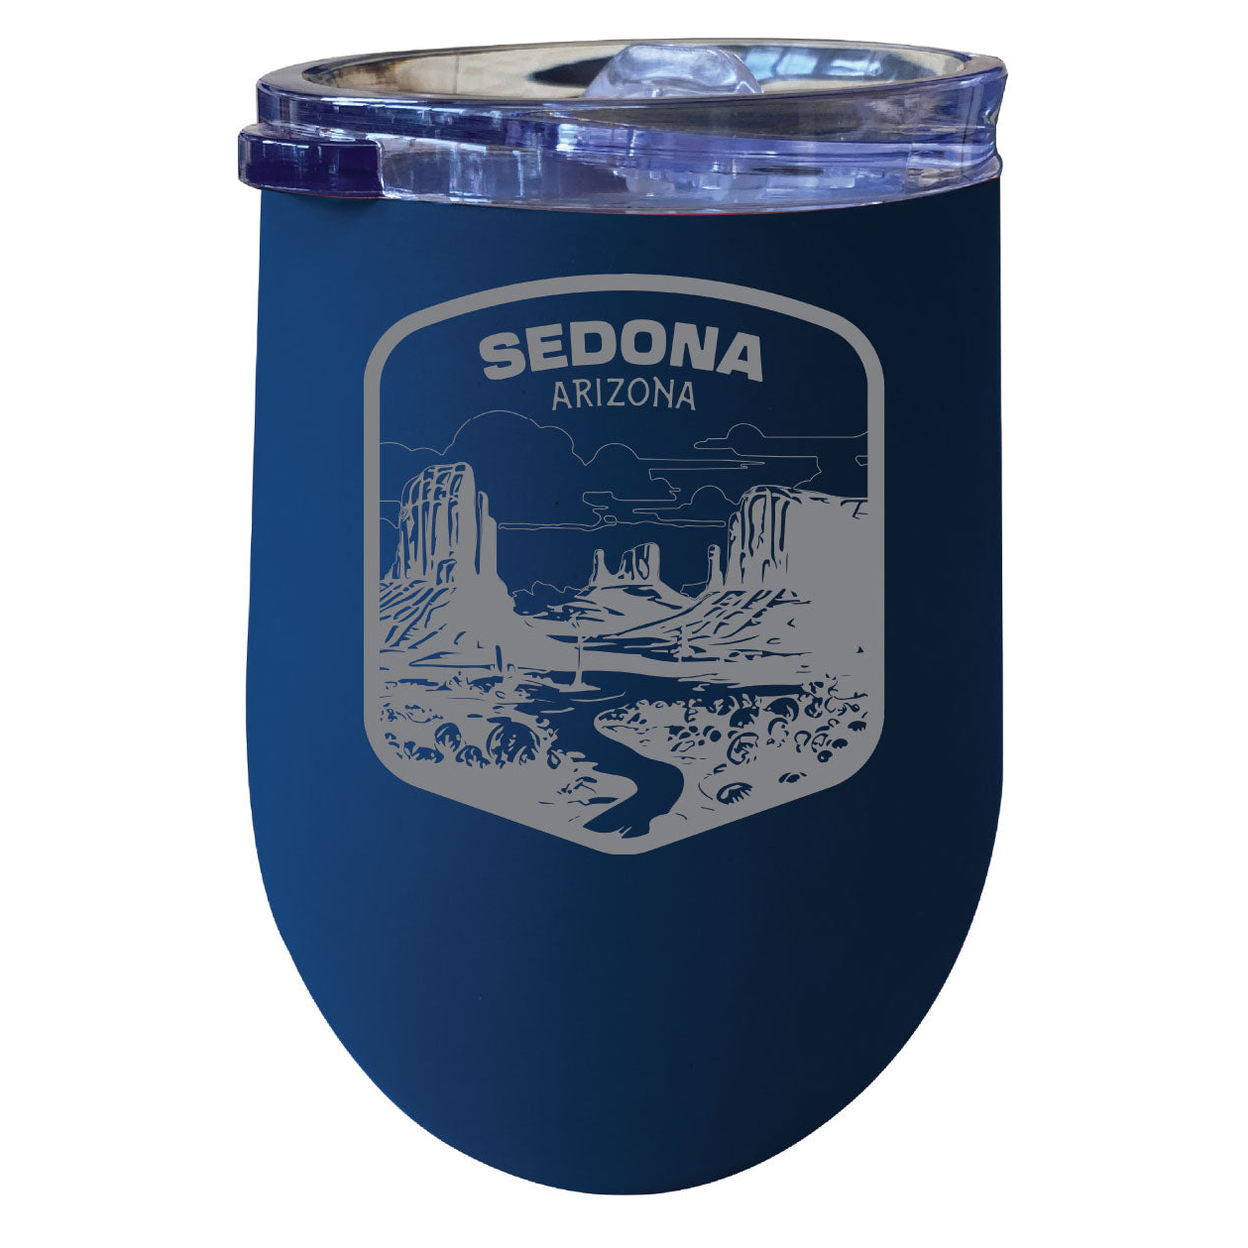 Sedona Arizona Souvenir 12 Oz Engraved Insulated Wine Stainless Steel Tumbler - Navy,,2-Pack